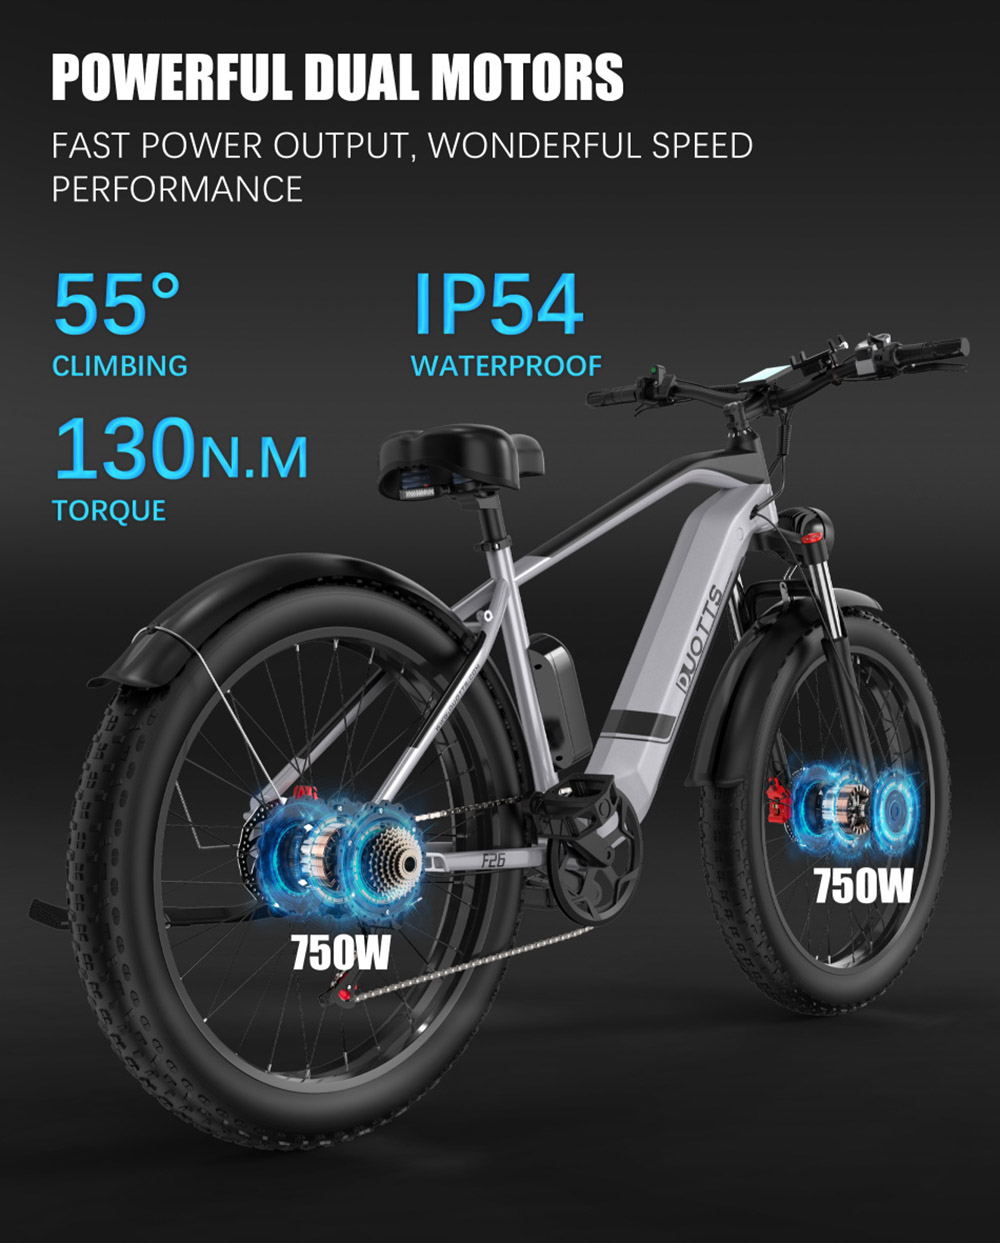 DUOTTS F26 Electric Bike 750W*2 Dual Motors LG 20Ah Battery 26*4.0 Fat Tire 55km/h Max Speed 55 Degree Climbing - Silver